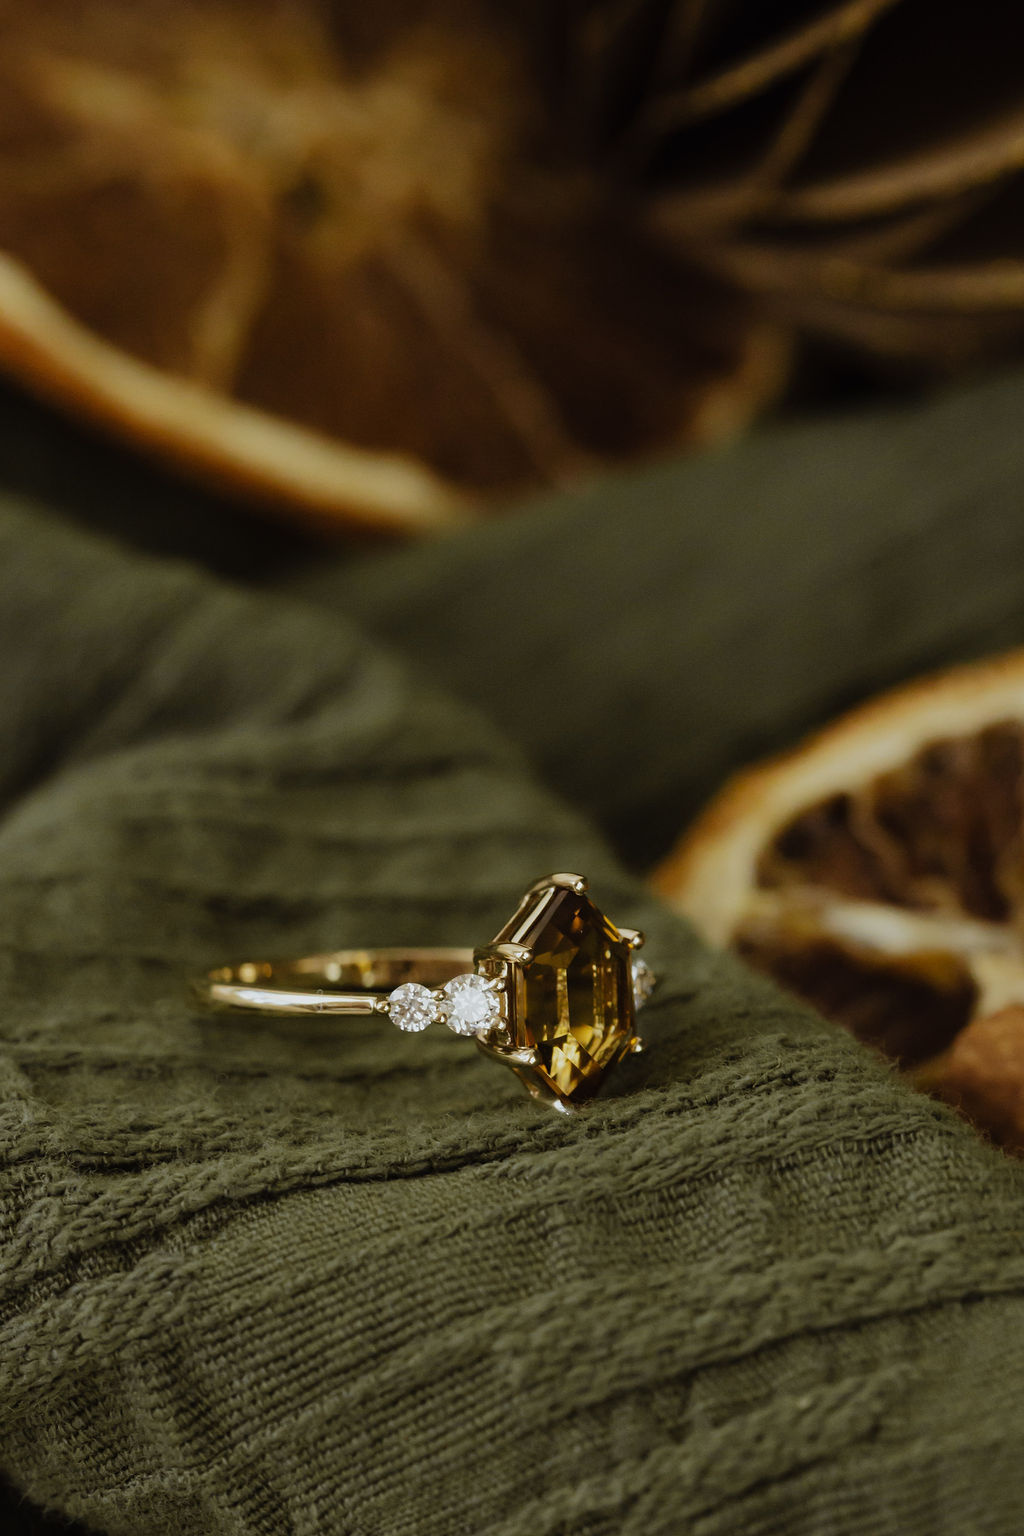 Pear shaped rose quartz ring rose gold unique engagement ring diamond –  Ohjewel